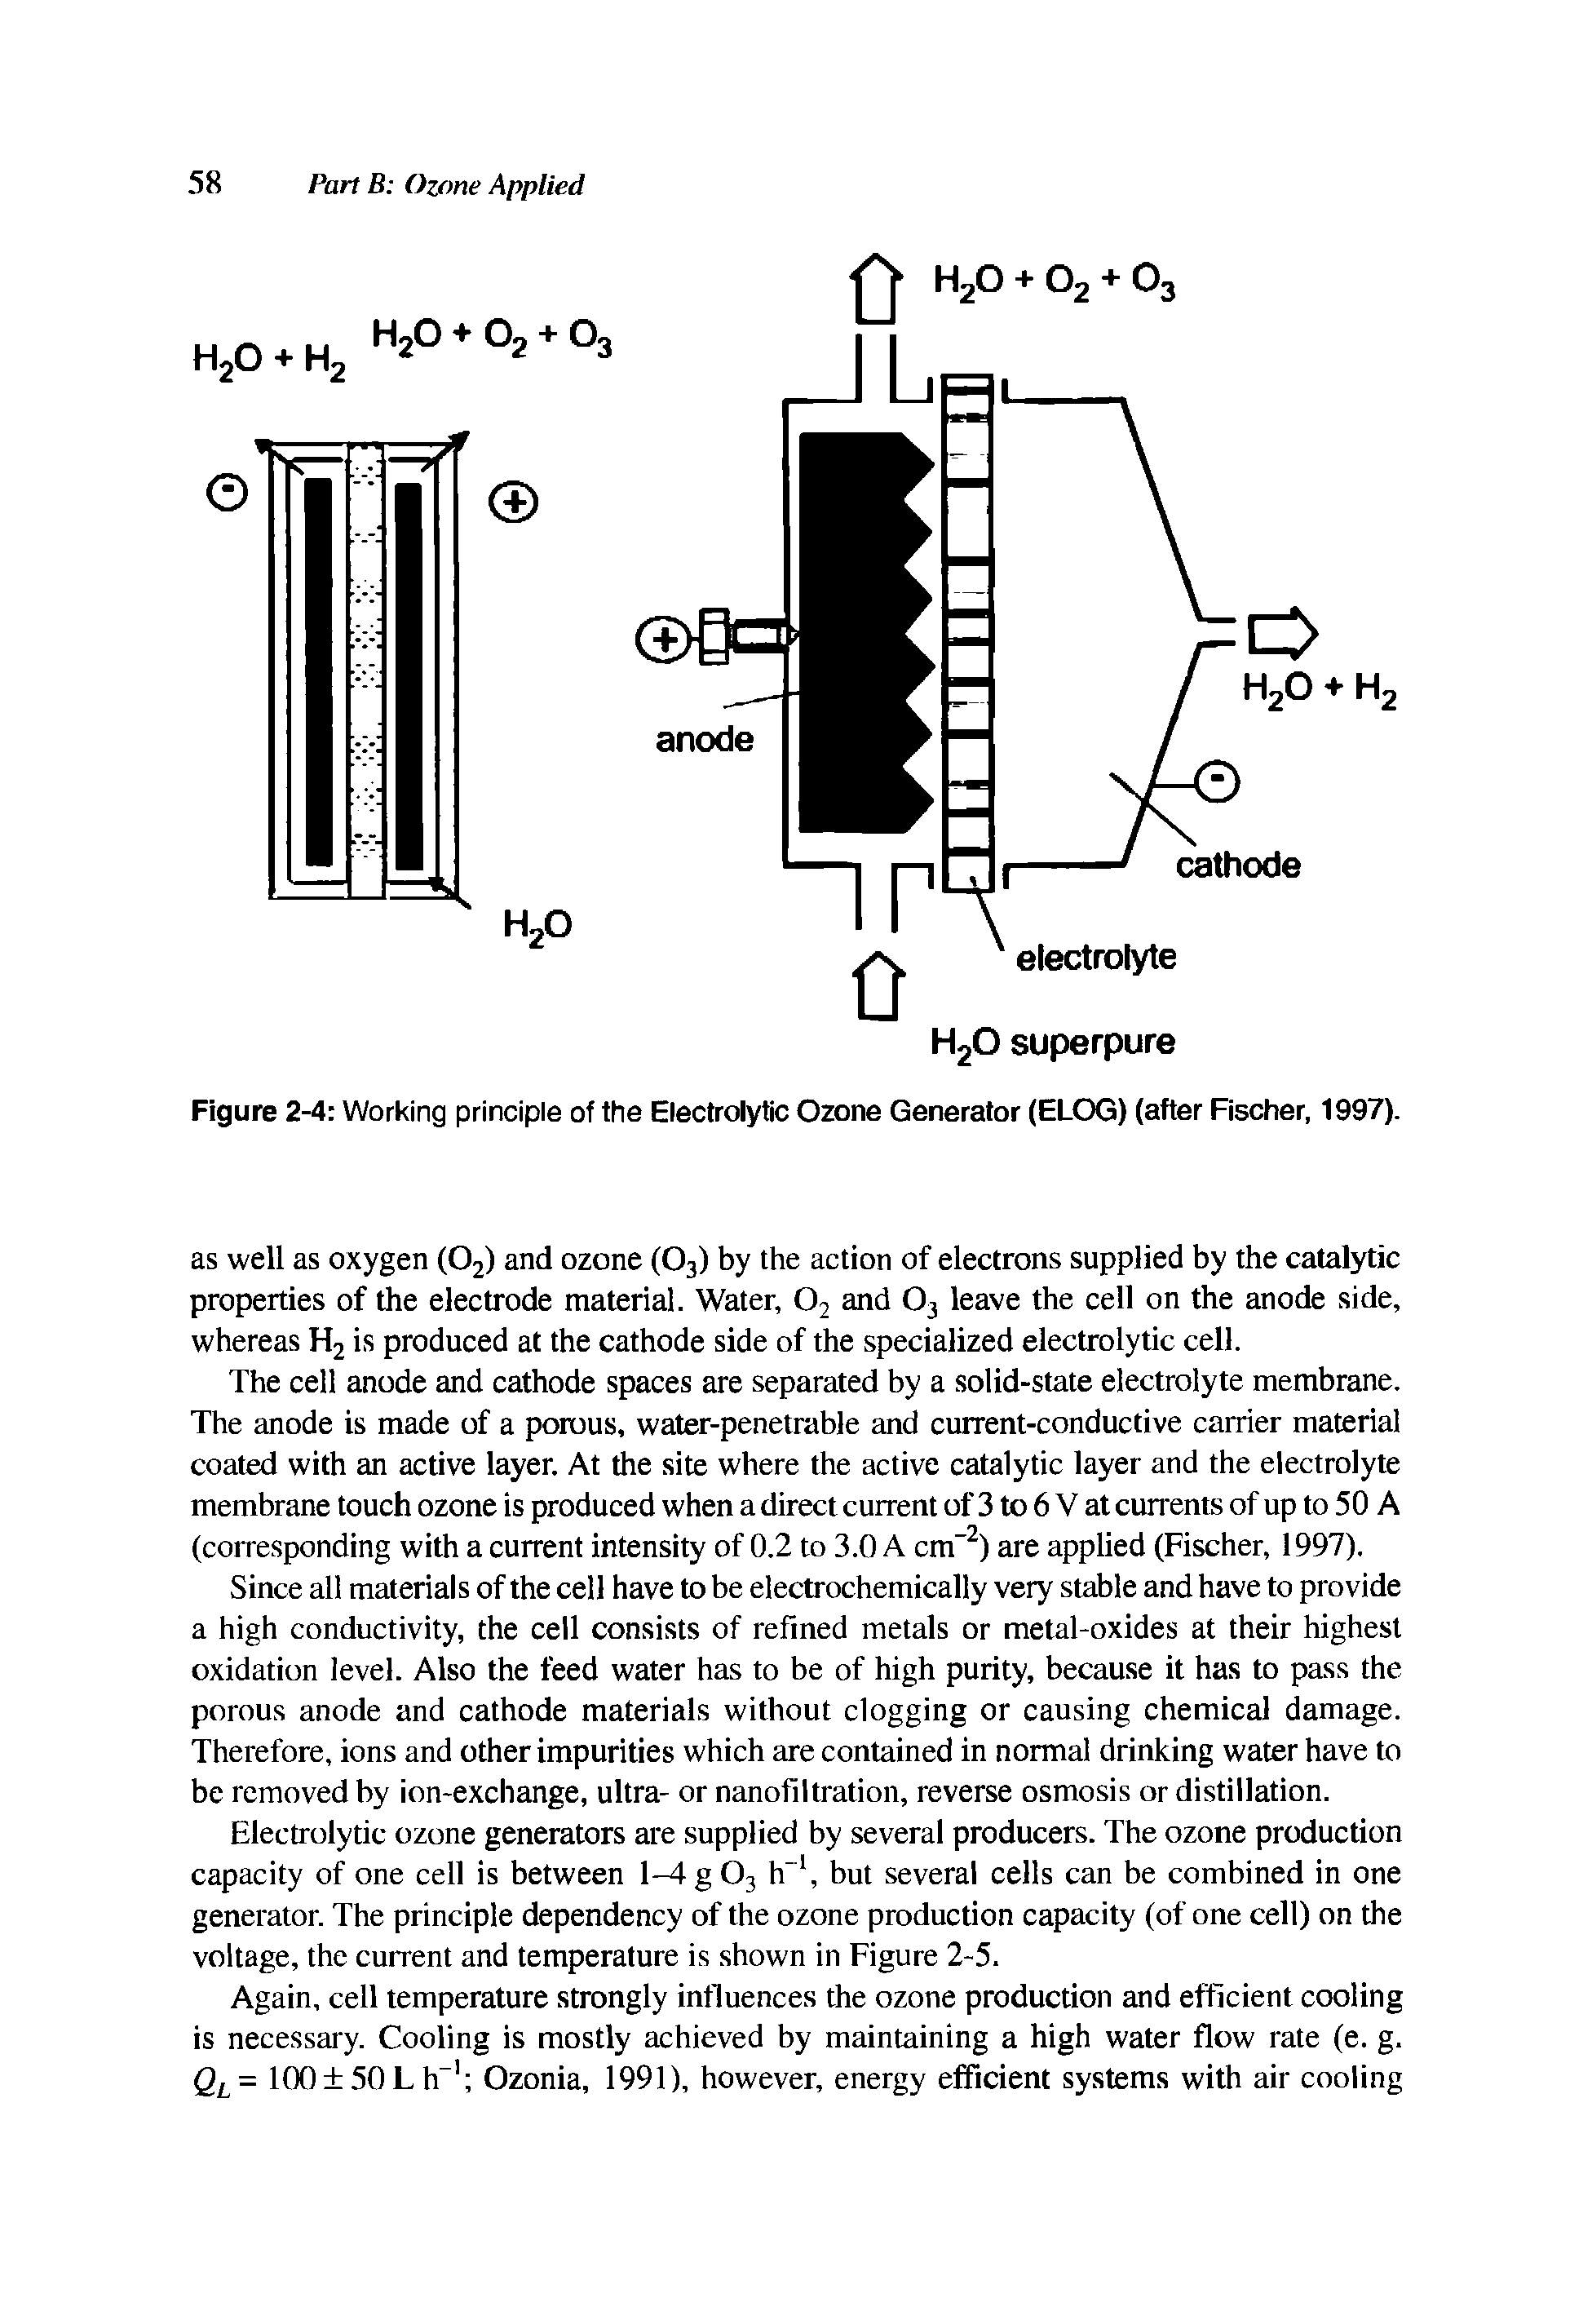 Figure 2-4 Working principle of the Electrolytic Ozone Generator (ELOG) (after Fischer, 1997).